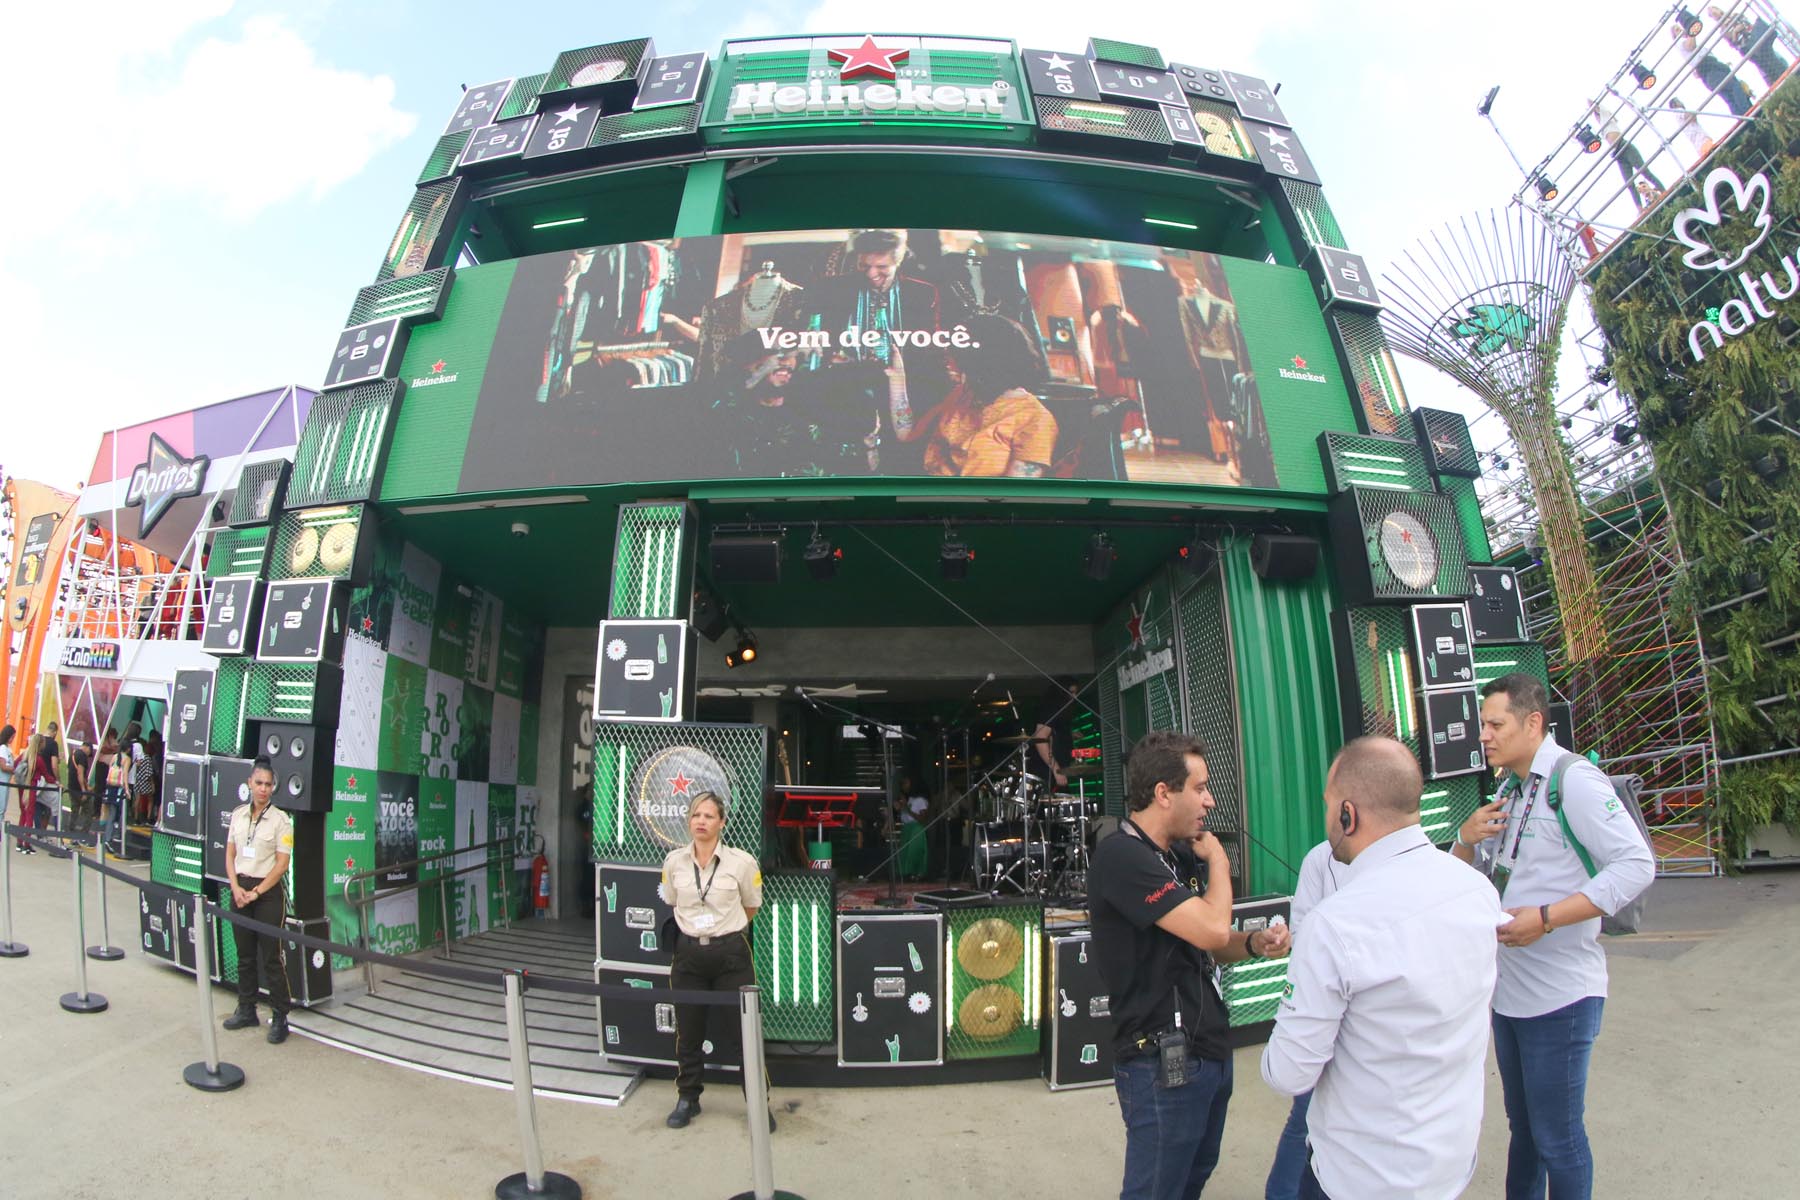 Heineken escala time feminino para garantir  segurança do lounge no Rock In Rio